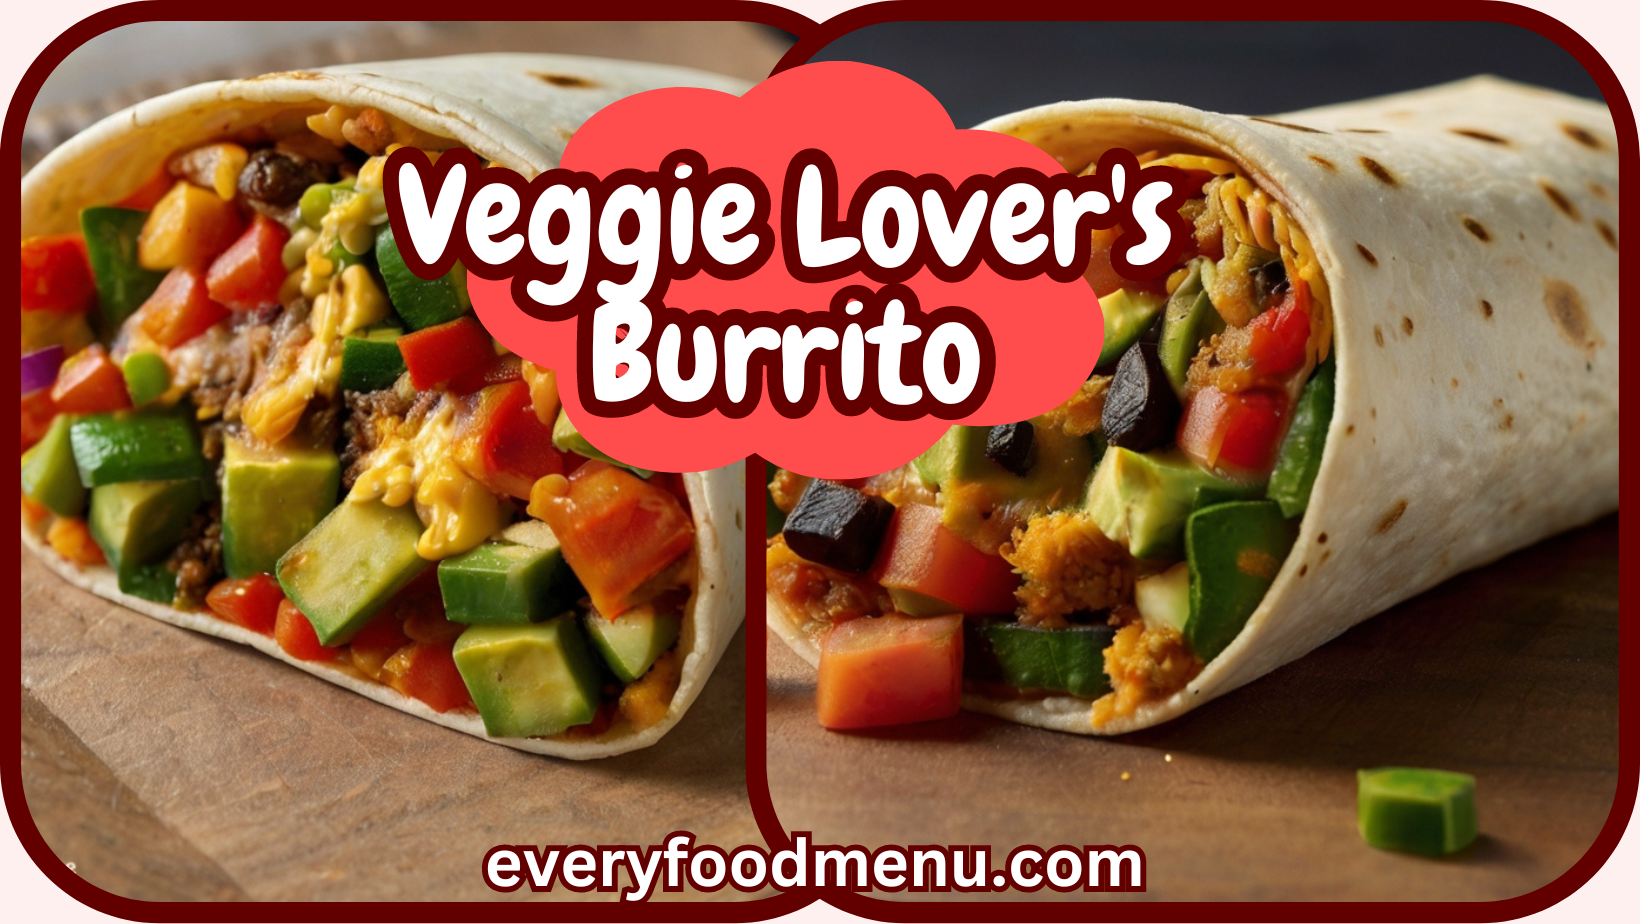 Veggie Lover's Burrito